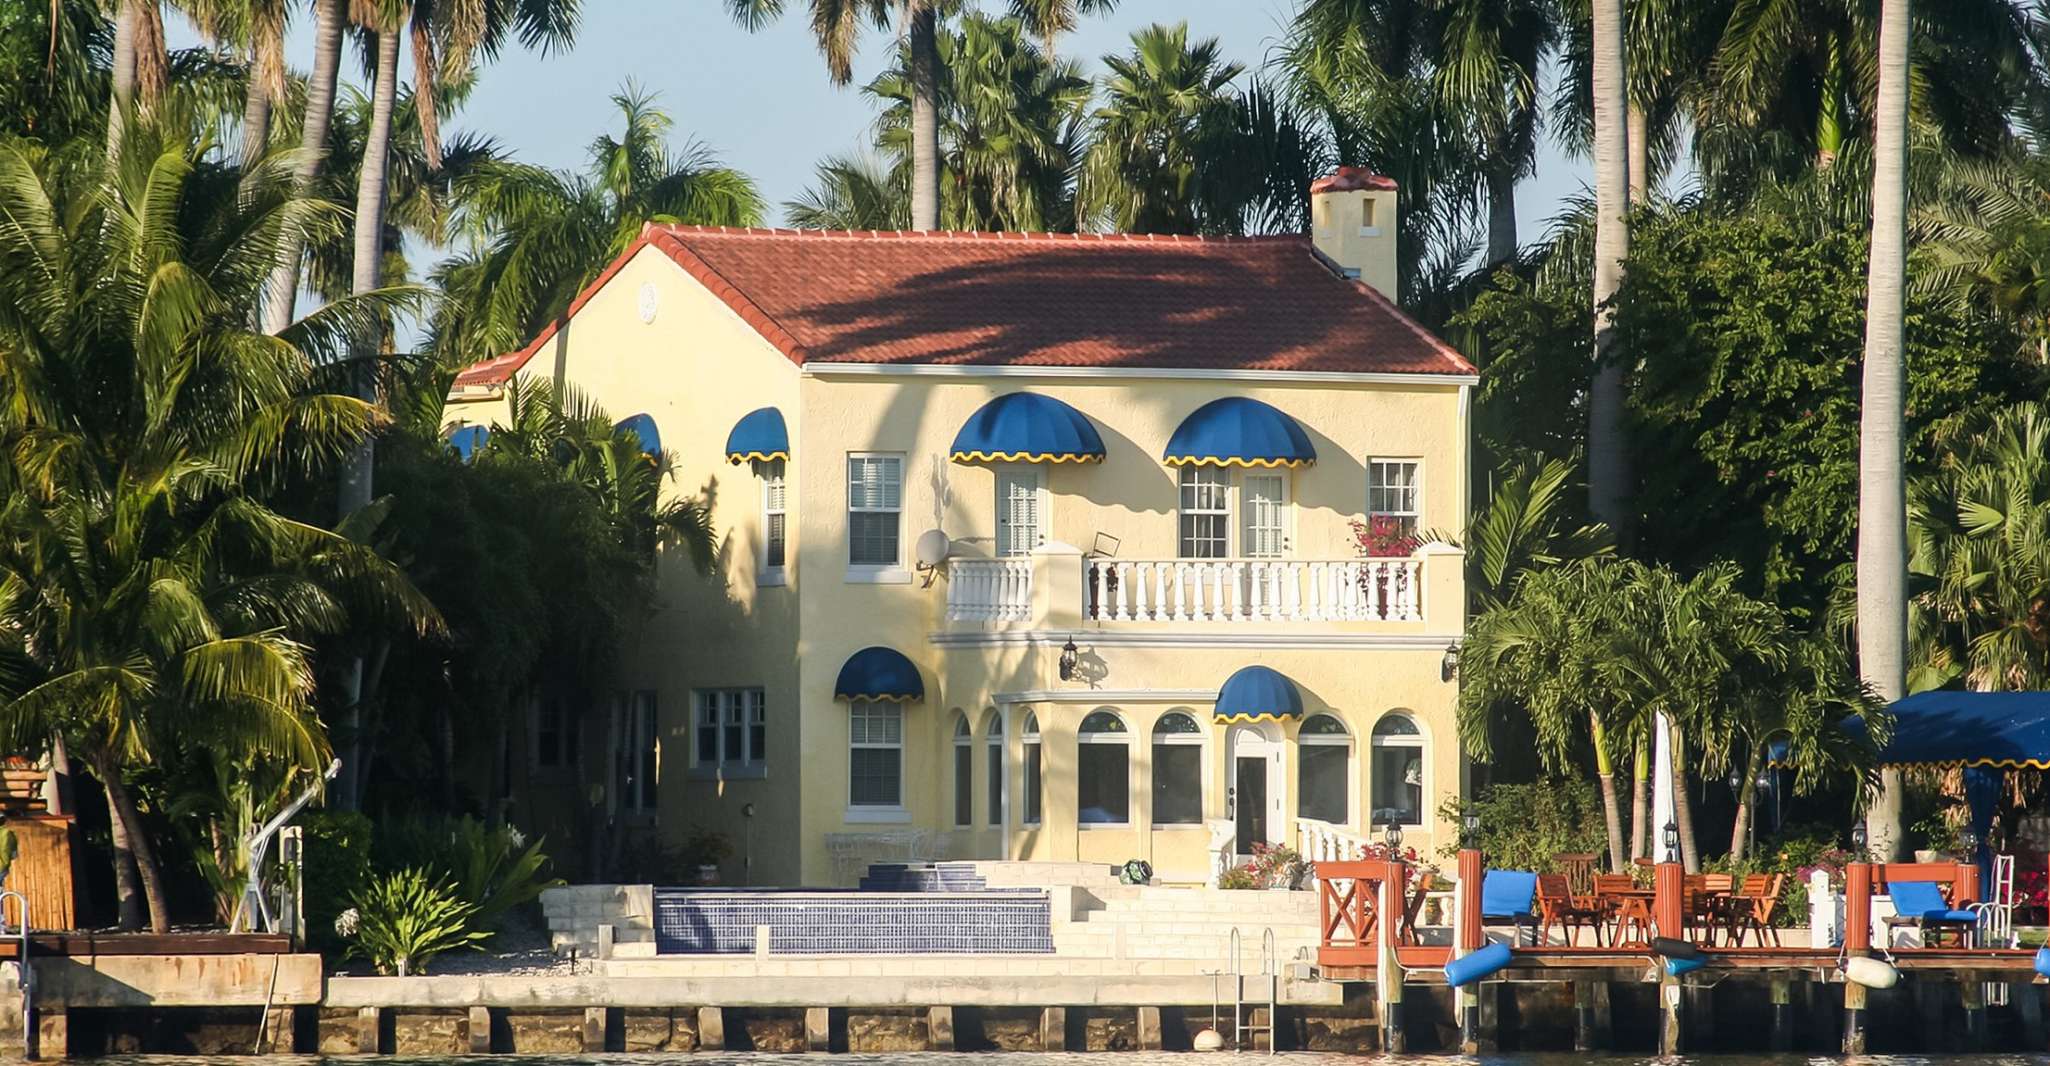 Miami, Skyline Cruise Millionaire's Homes & Venetian Islands - Housity